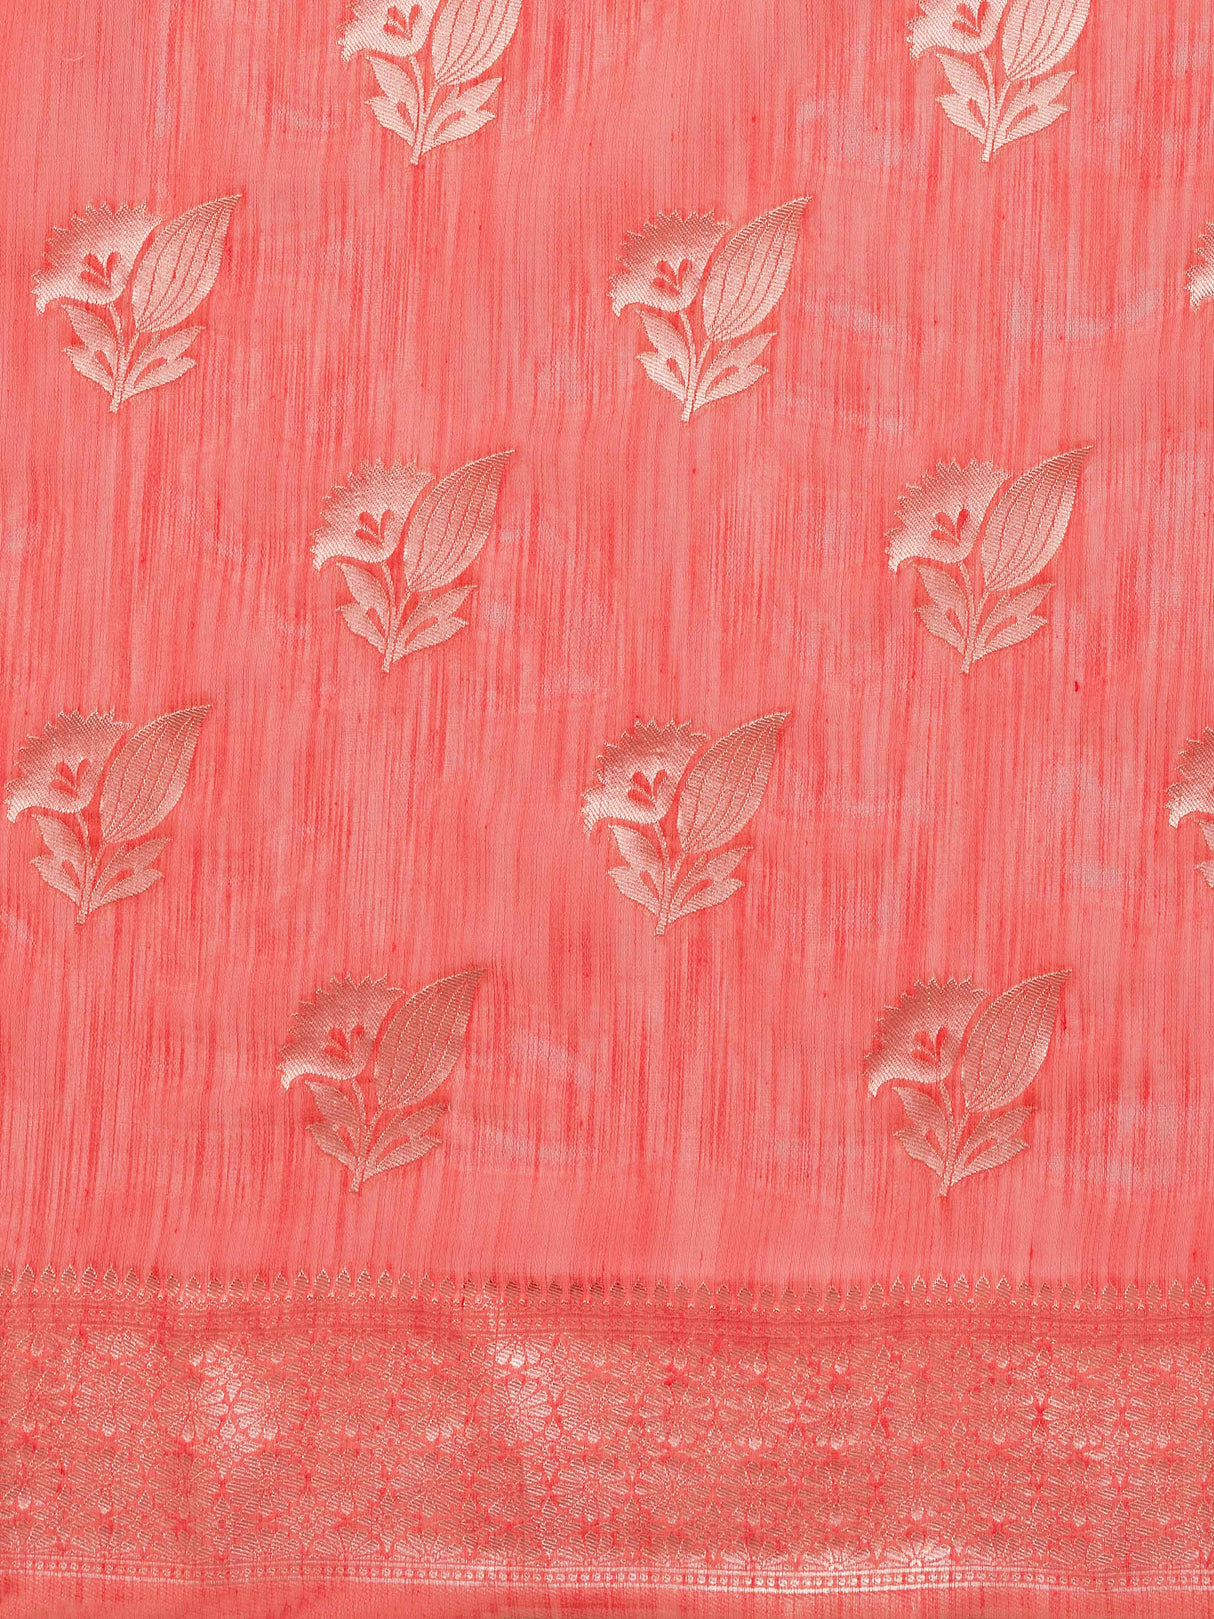 Mimosa Women's Woven Design Banarasi Poly Cotton Saree With Blouse Piece : SA00001060GJ